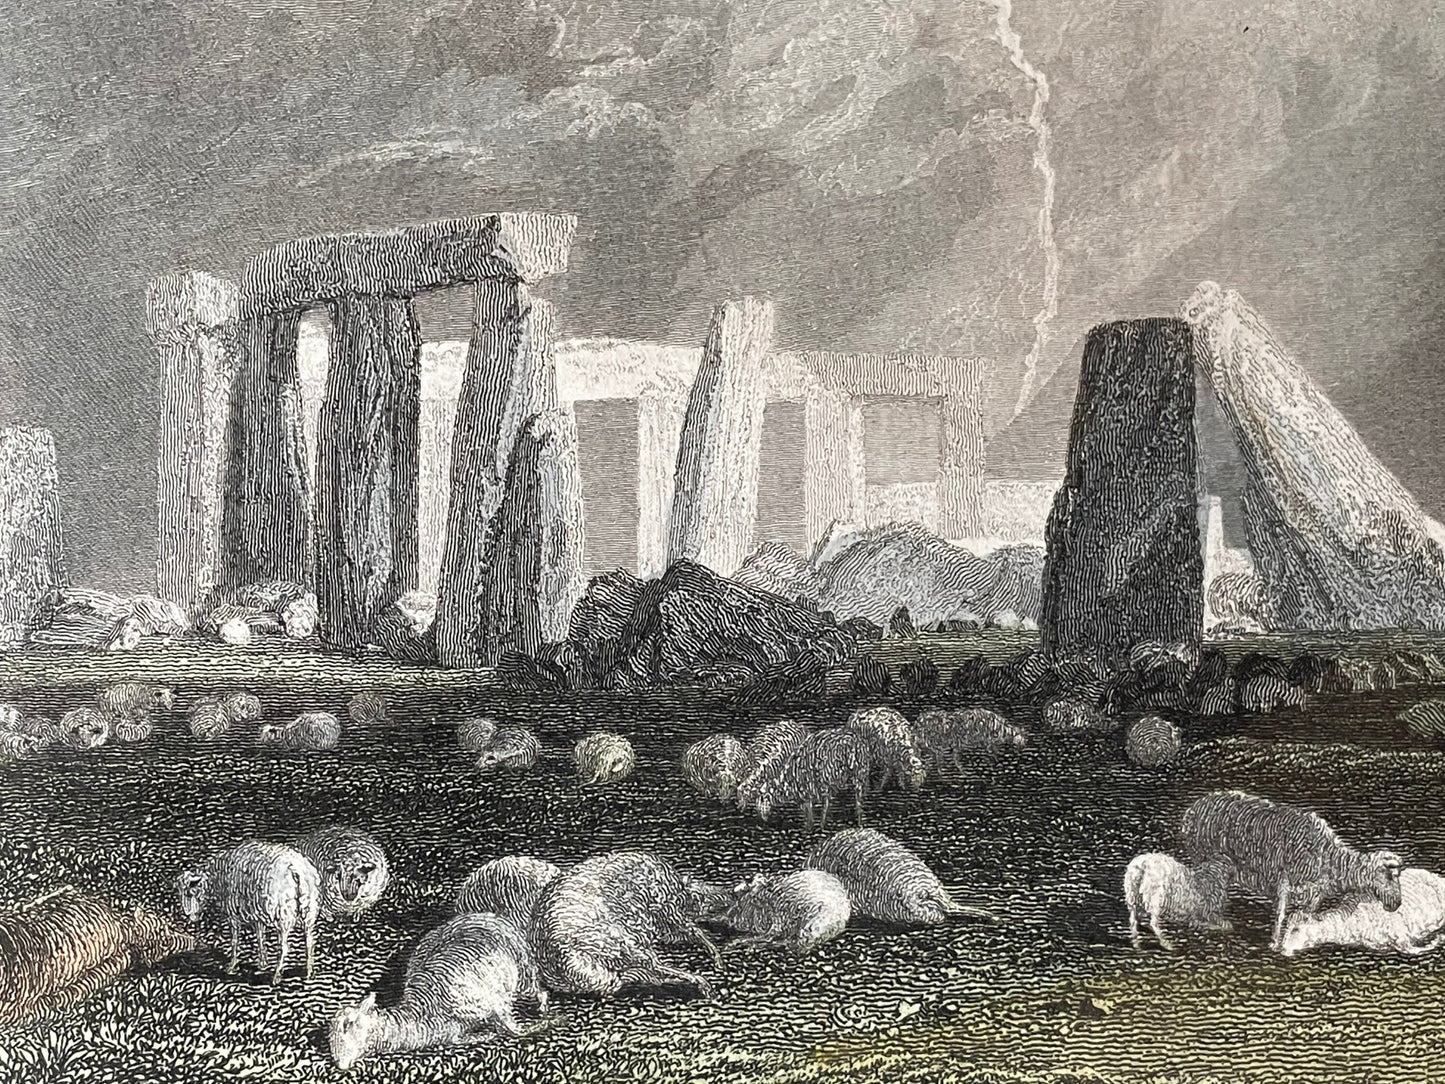 Stonehenge Print after Turner, 1830s